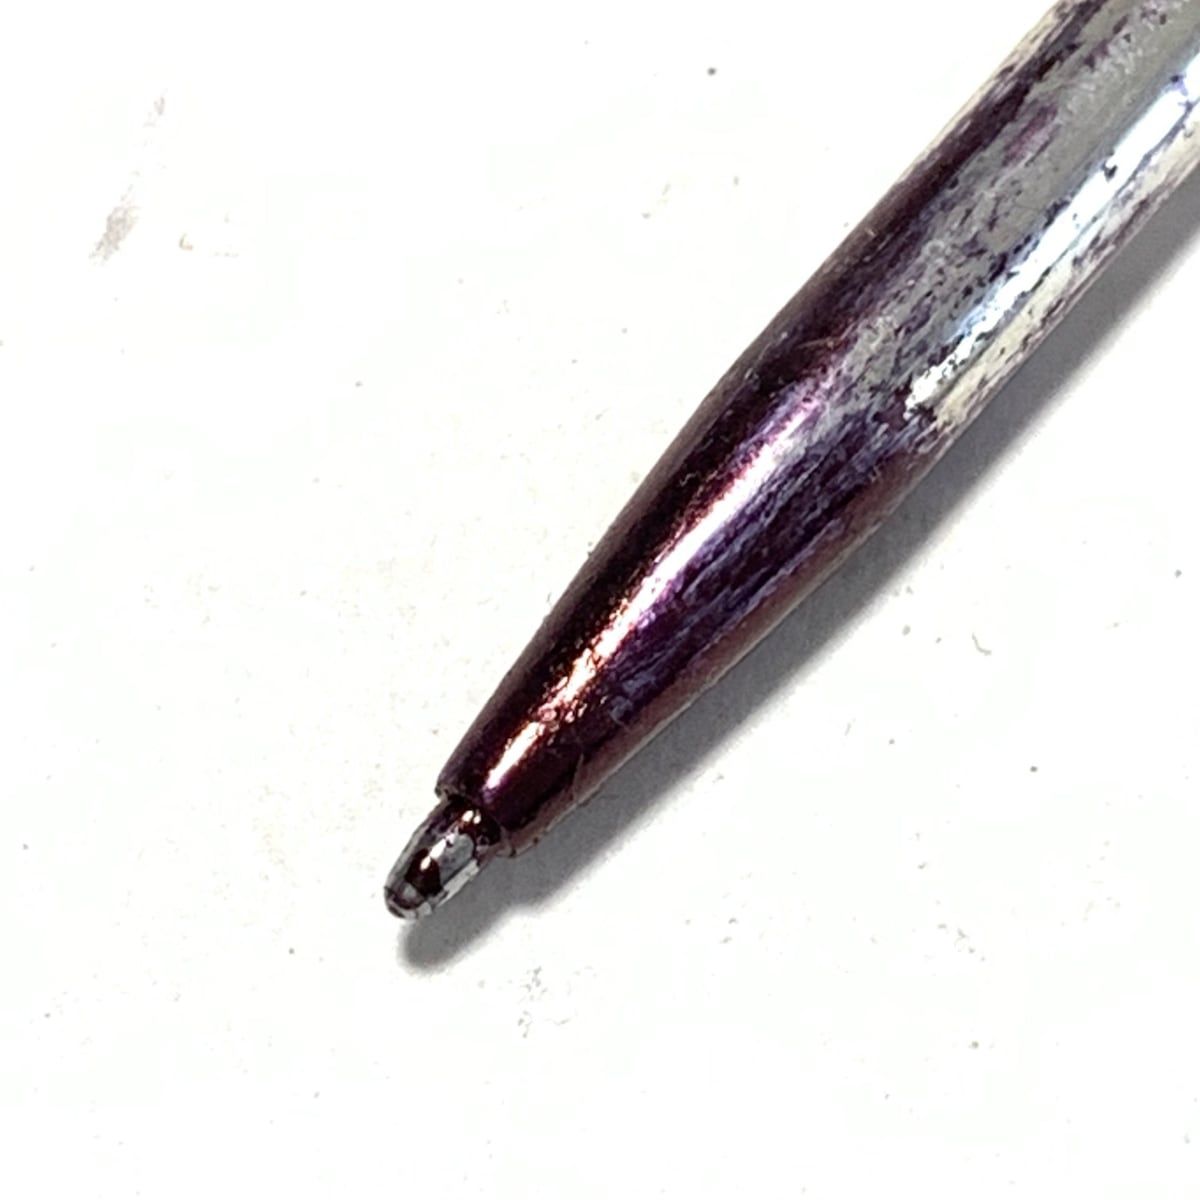 HERMES(エルメス) ボールペン - シルバー インクあり(黒) - メルカリ